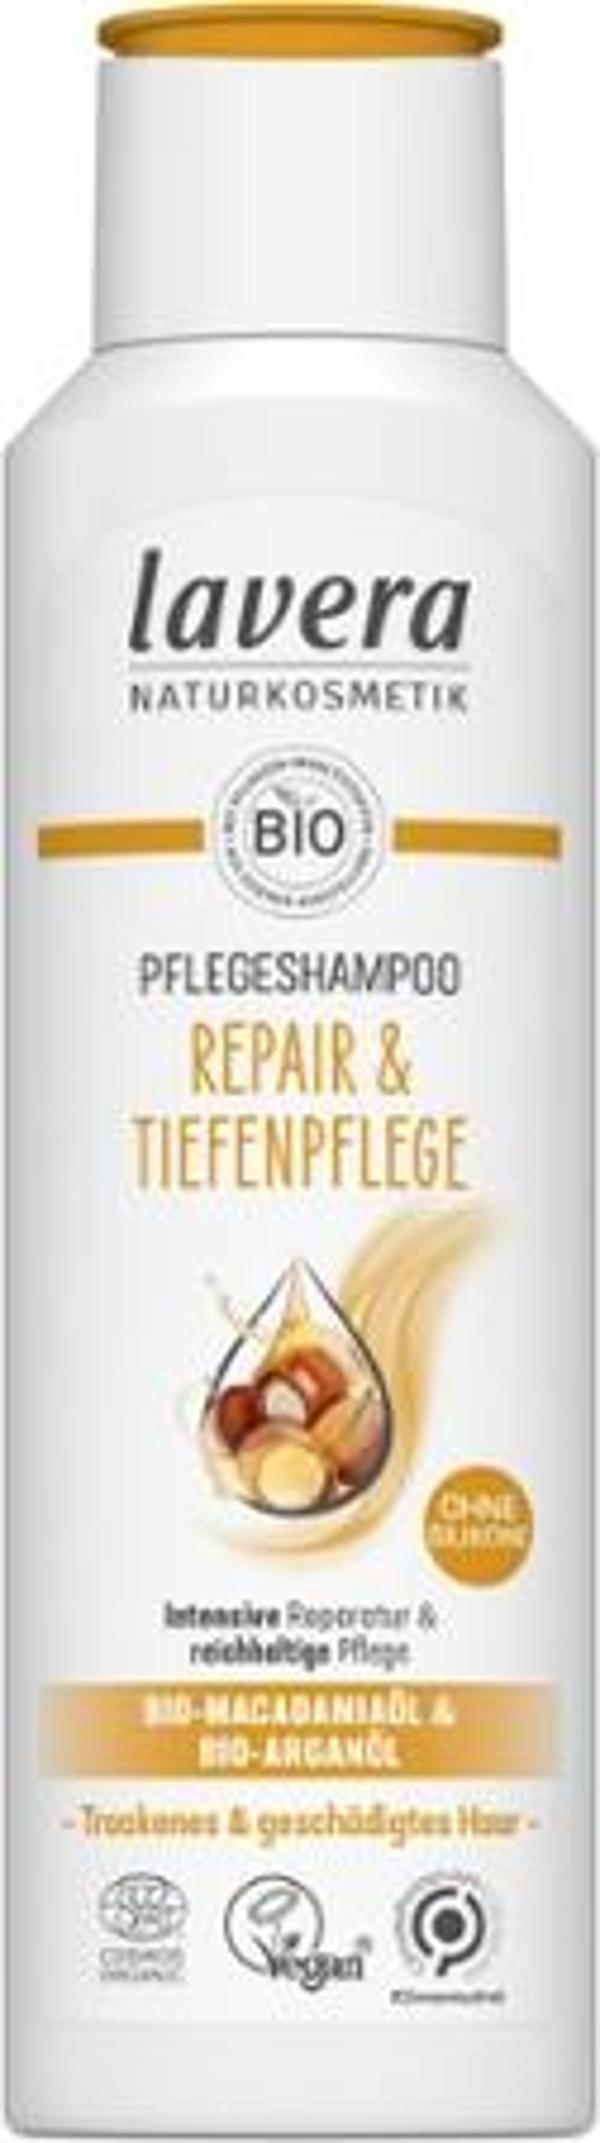 Produktfoto zu Shampoo Repair & Pflege